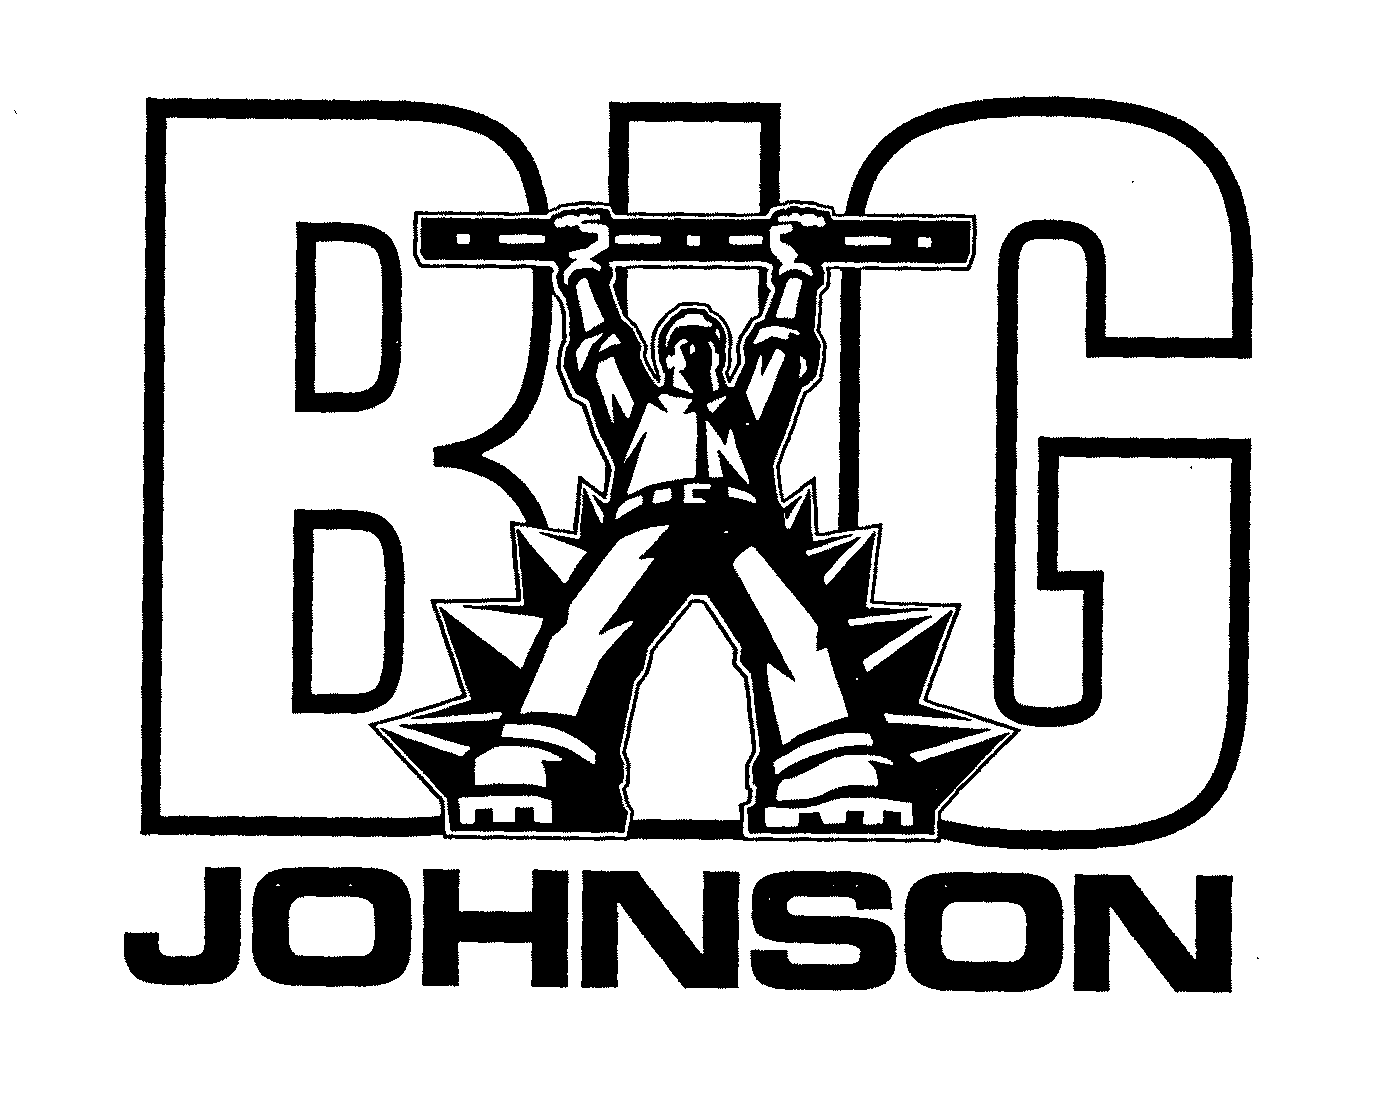  BIG JOHNSON